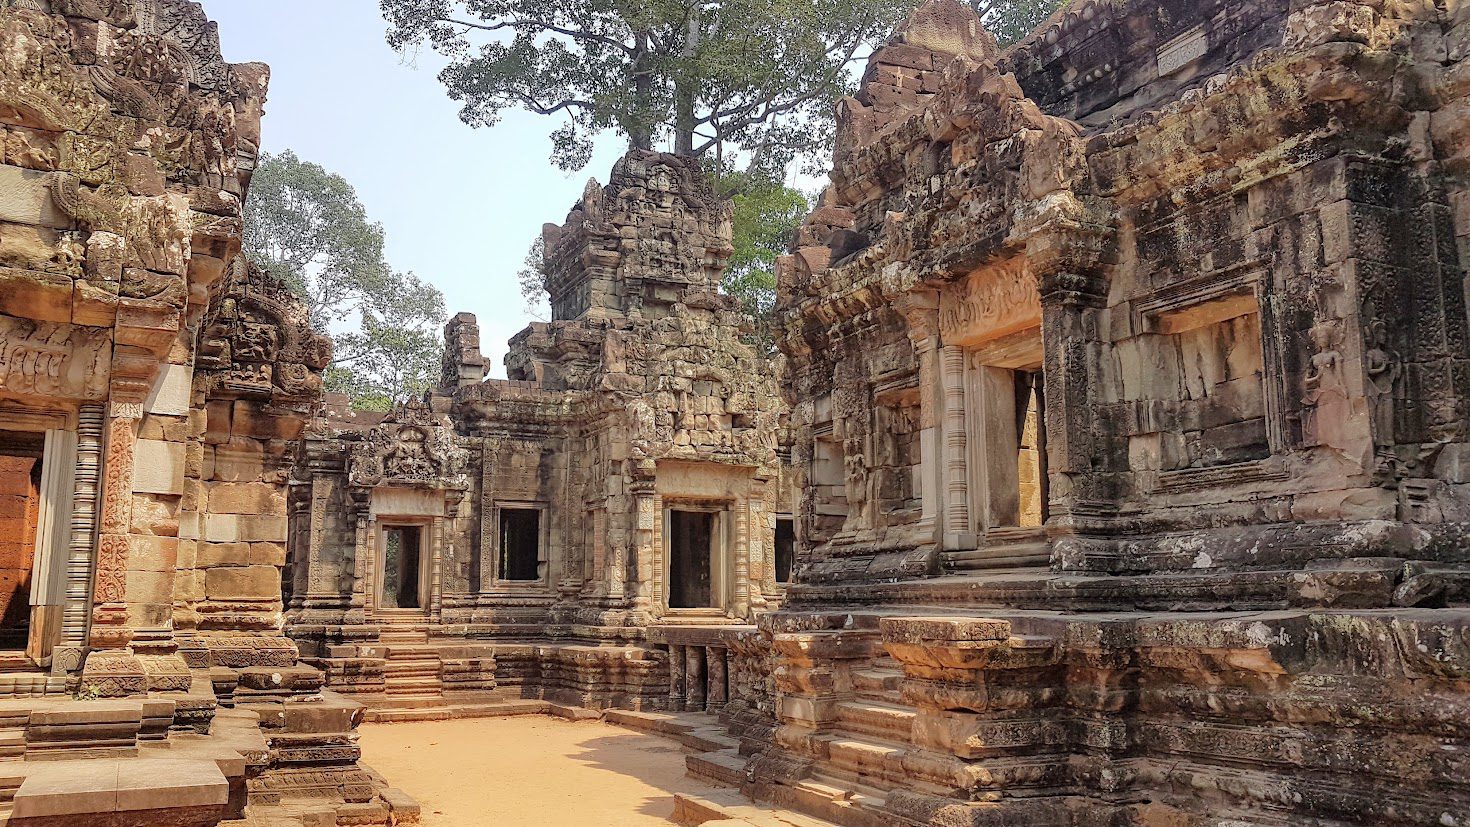 Ankor Wat in Cambodia